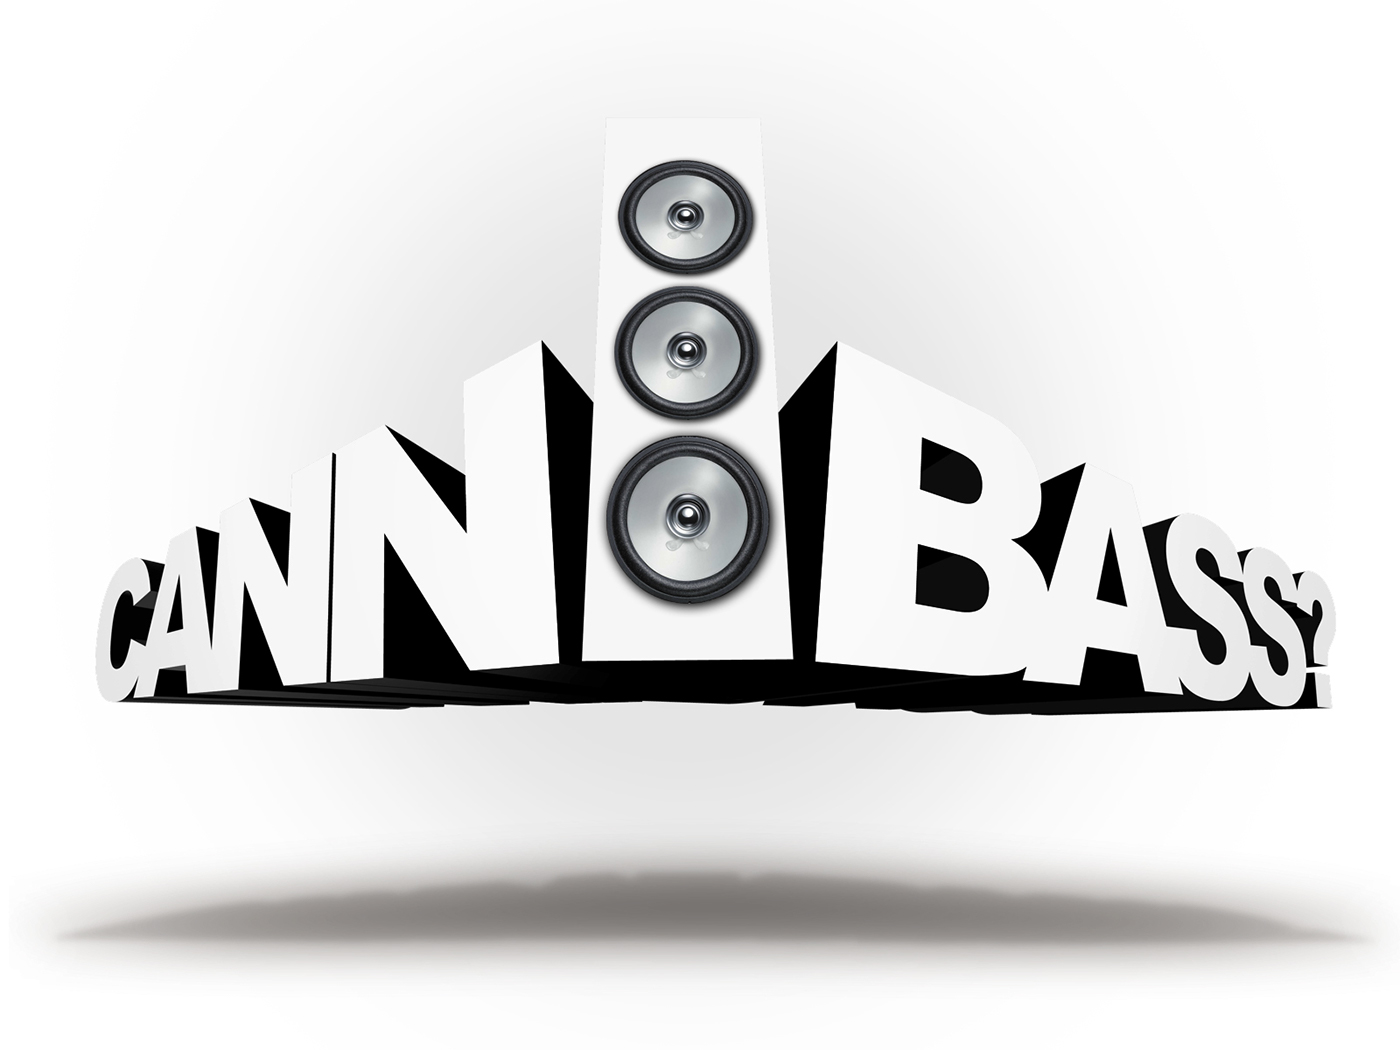 cannibass  cannabis can bass logo 3D White black tshirt business card sticker wallpaper Wallpapers green cann-i-bass cannibass? cann-i-bass?